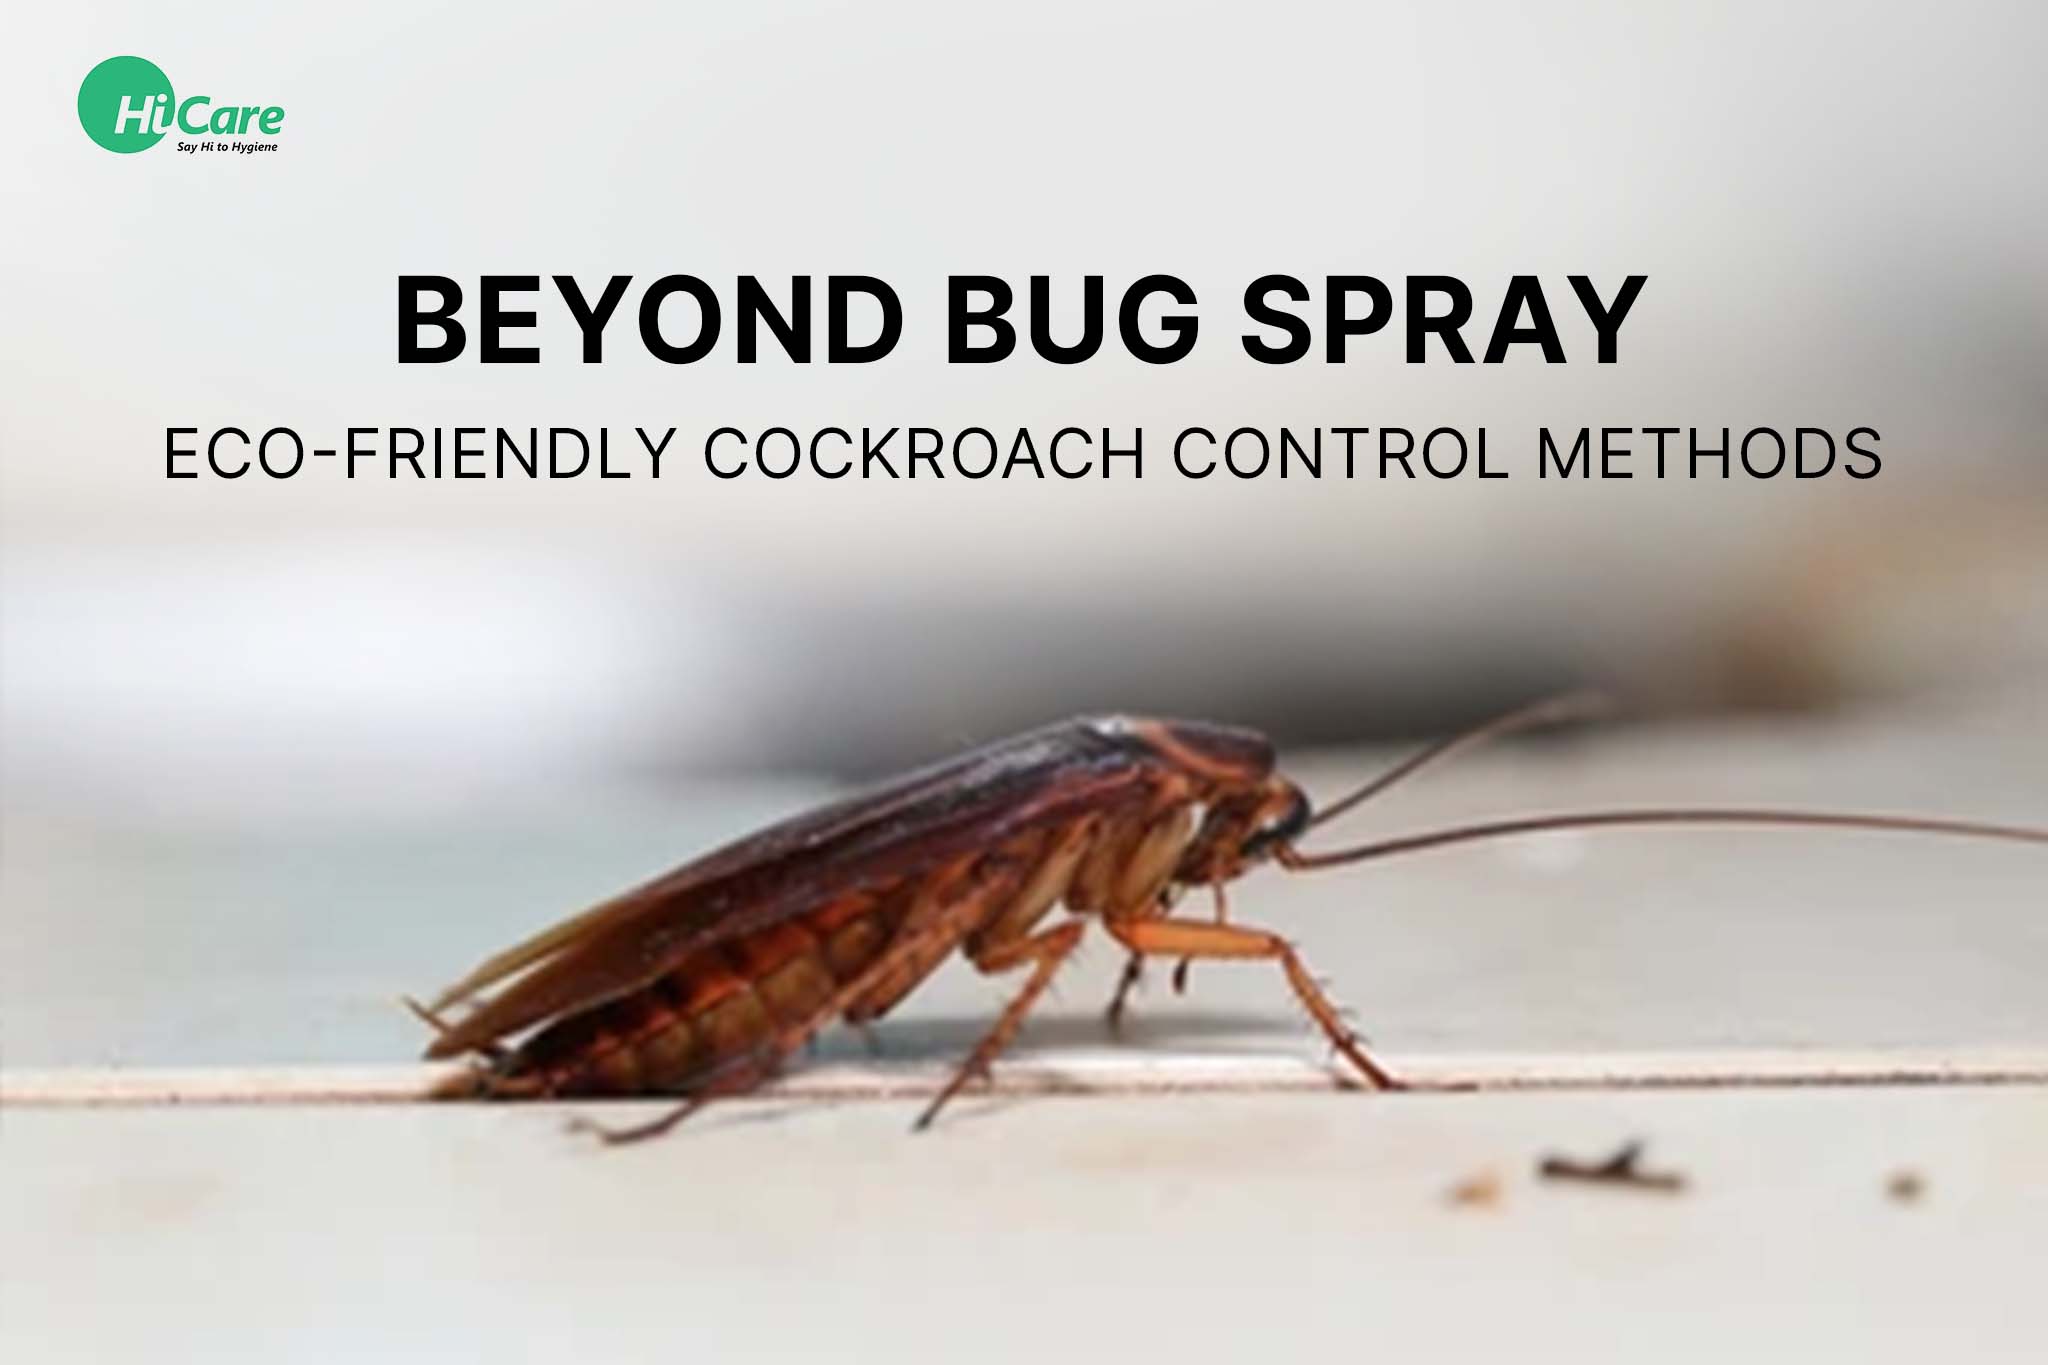 eco-friendly cockroach control methods